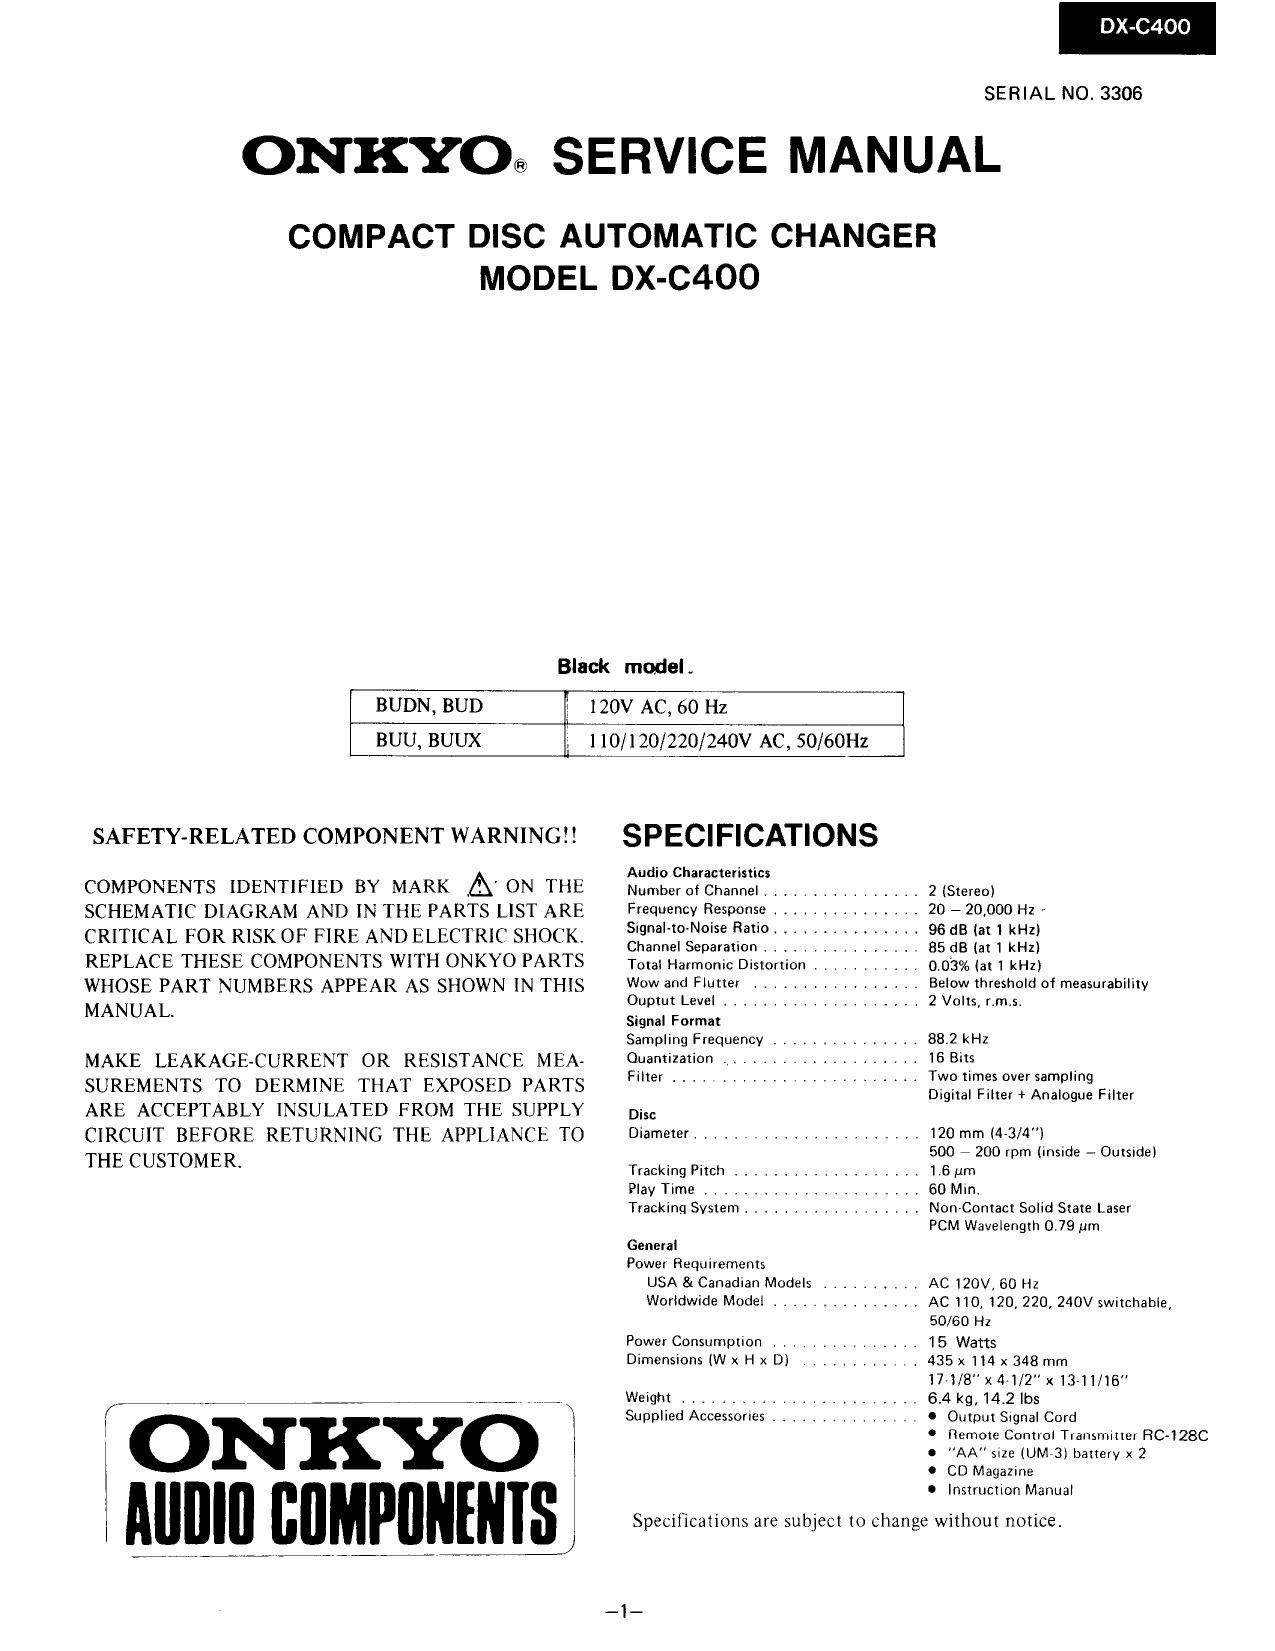 Onkyo DXC 400 Service Manual